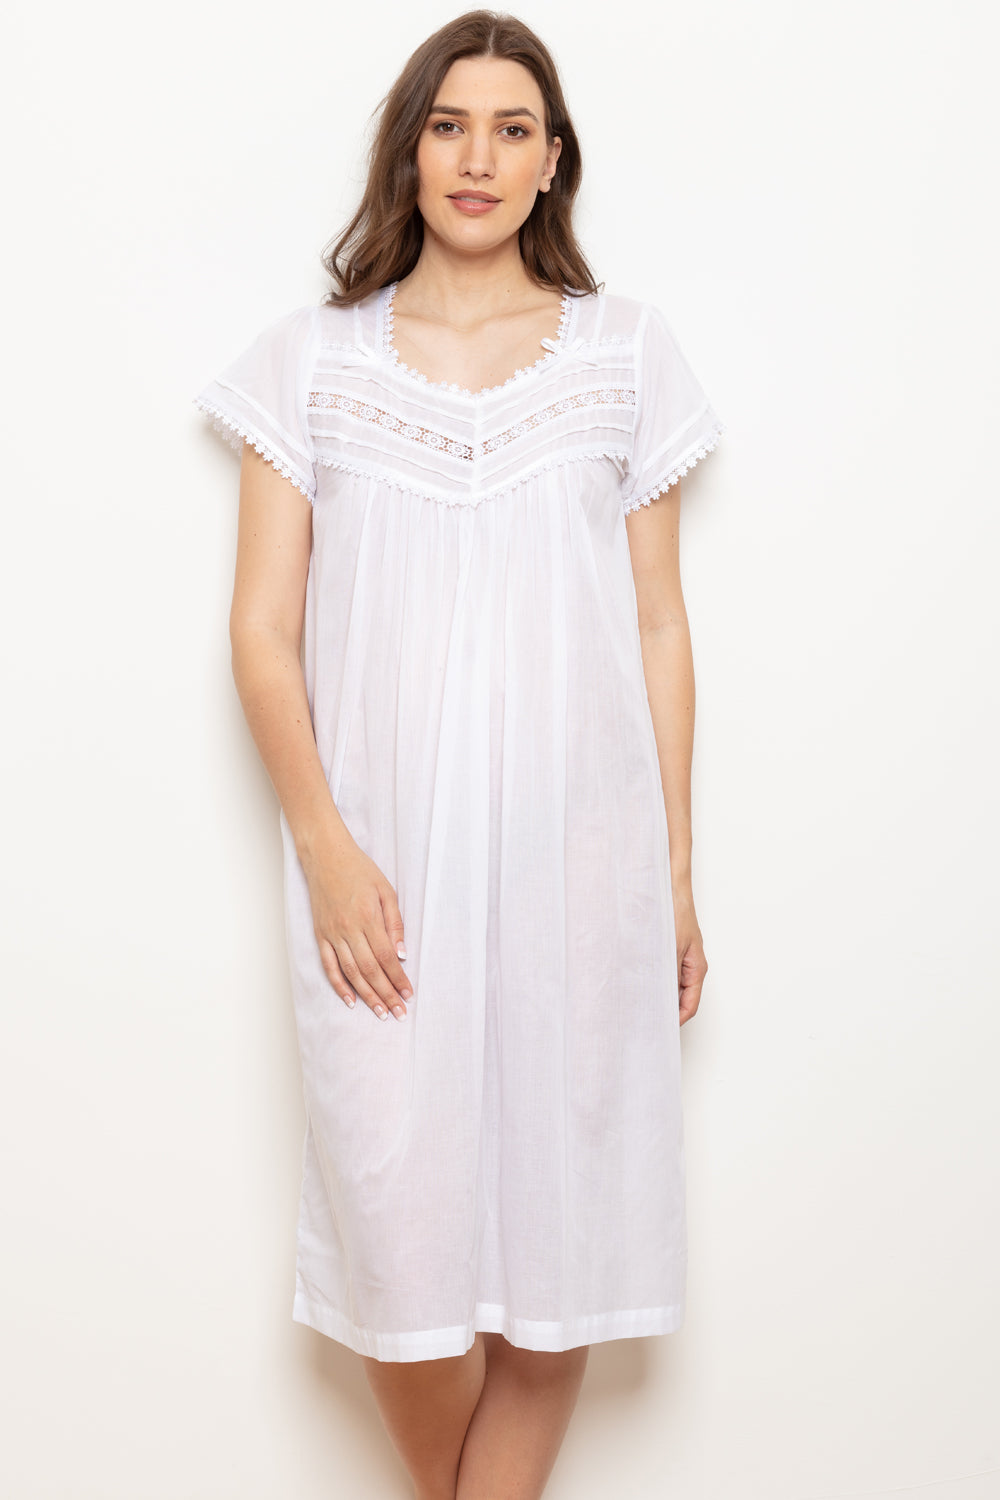 Cottonreal 'Revena' Cotton Voile Short Sleeve Nightdress - White